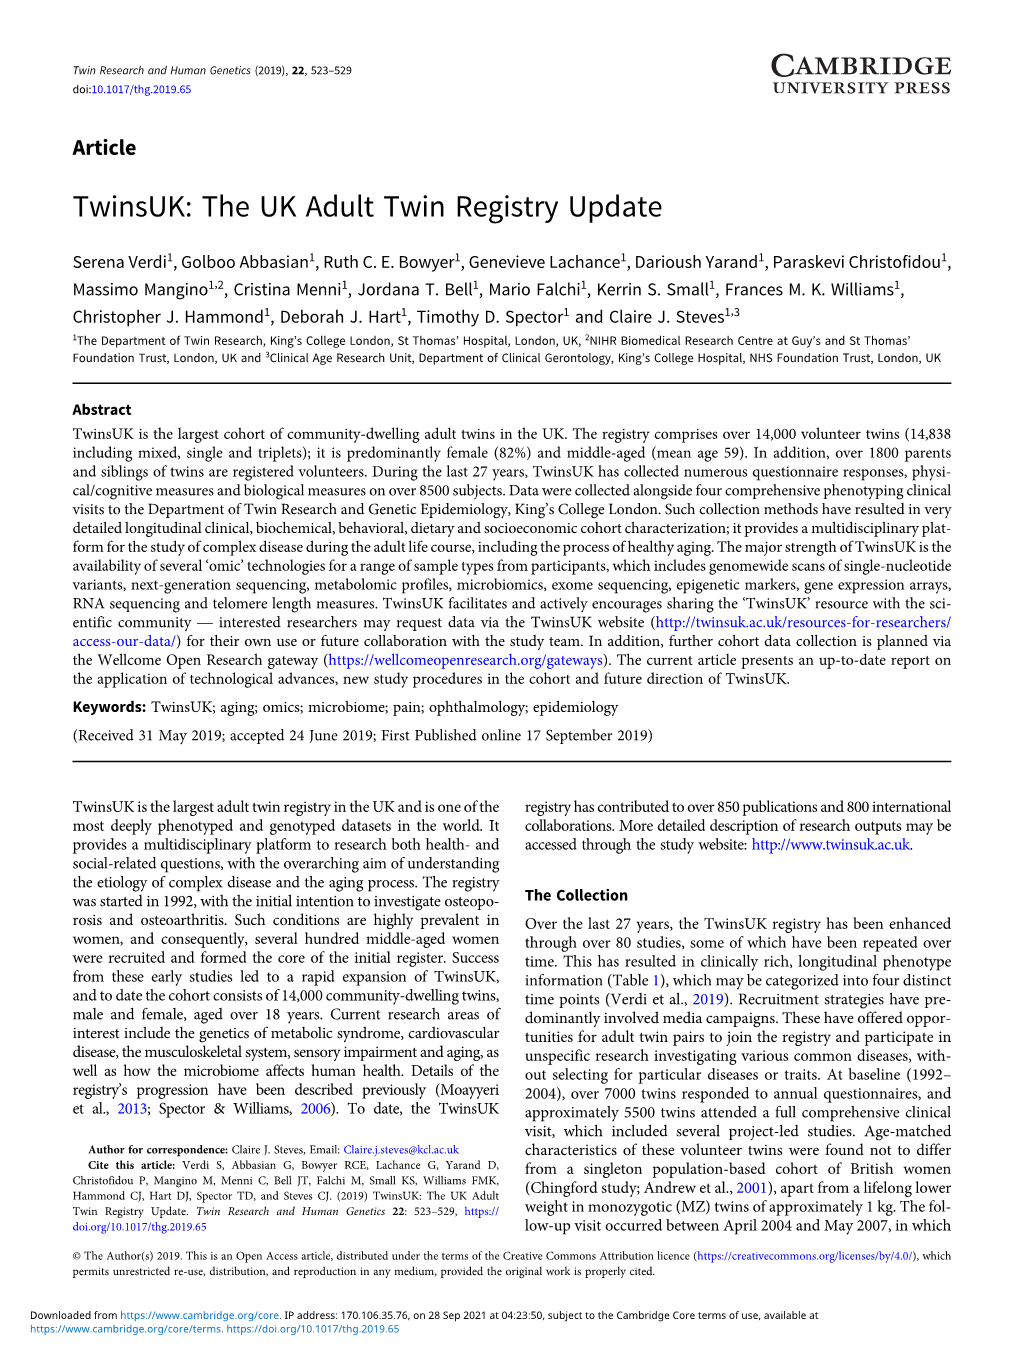 Twinsuk: the UK Adult Twin Registry Update